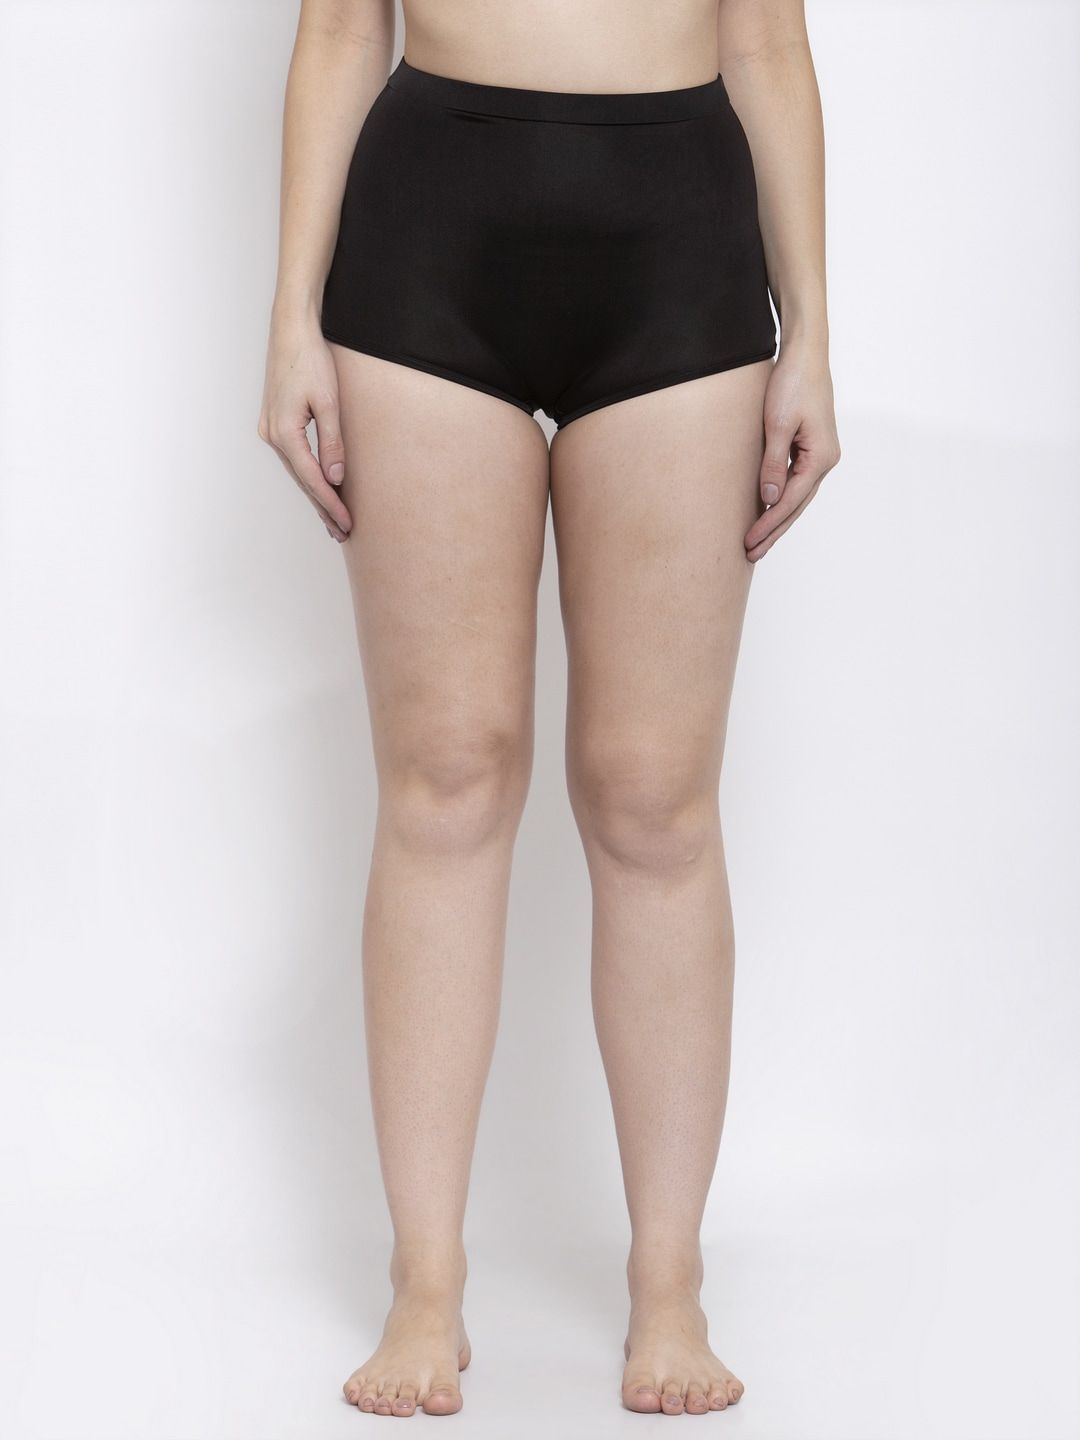 CUKOO Women Black High-Waist Bikini Bottoms CK19-191 Price in India